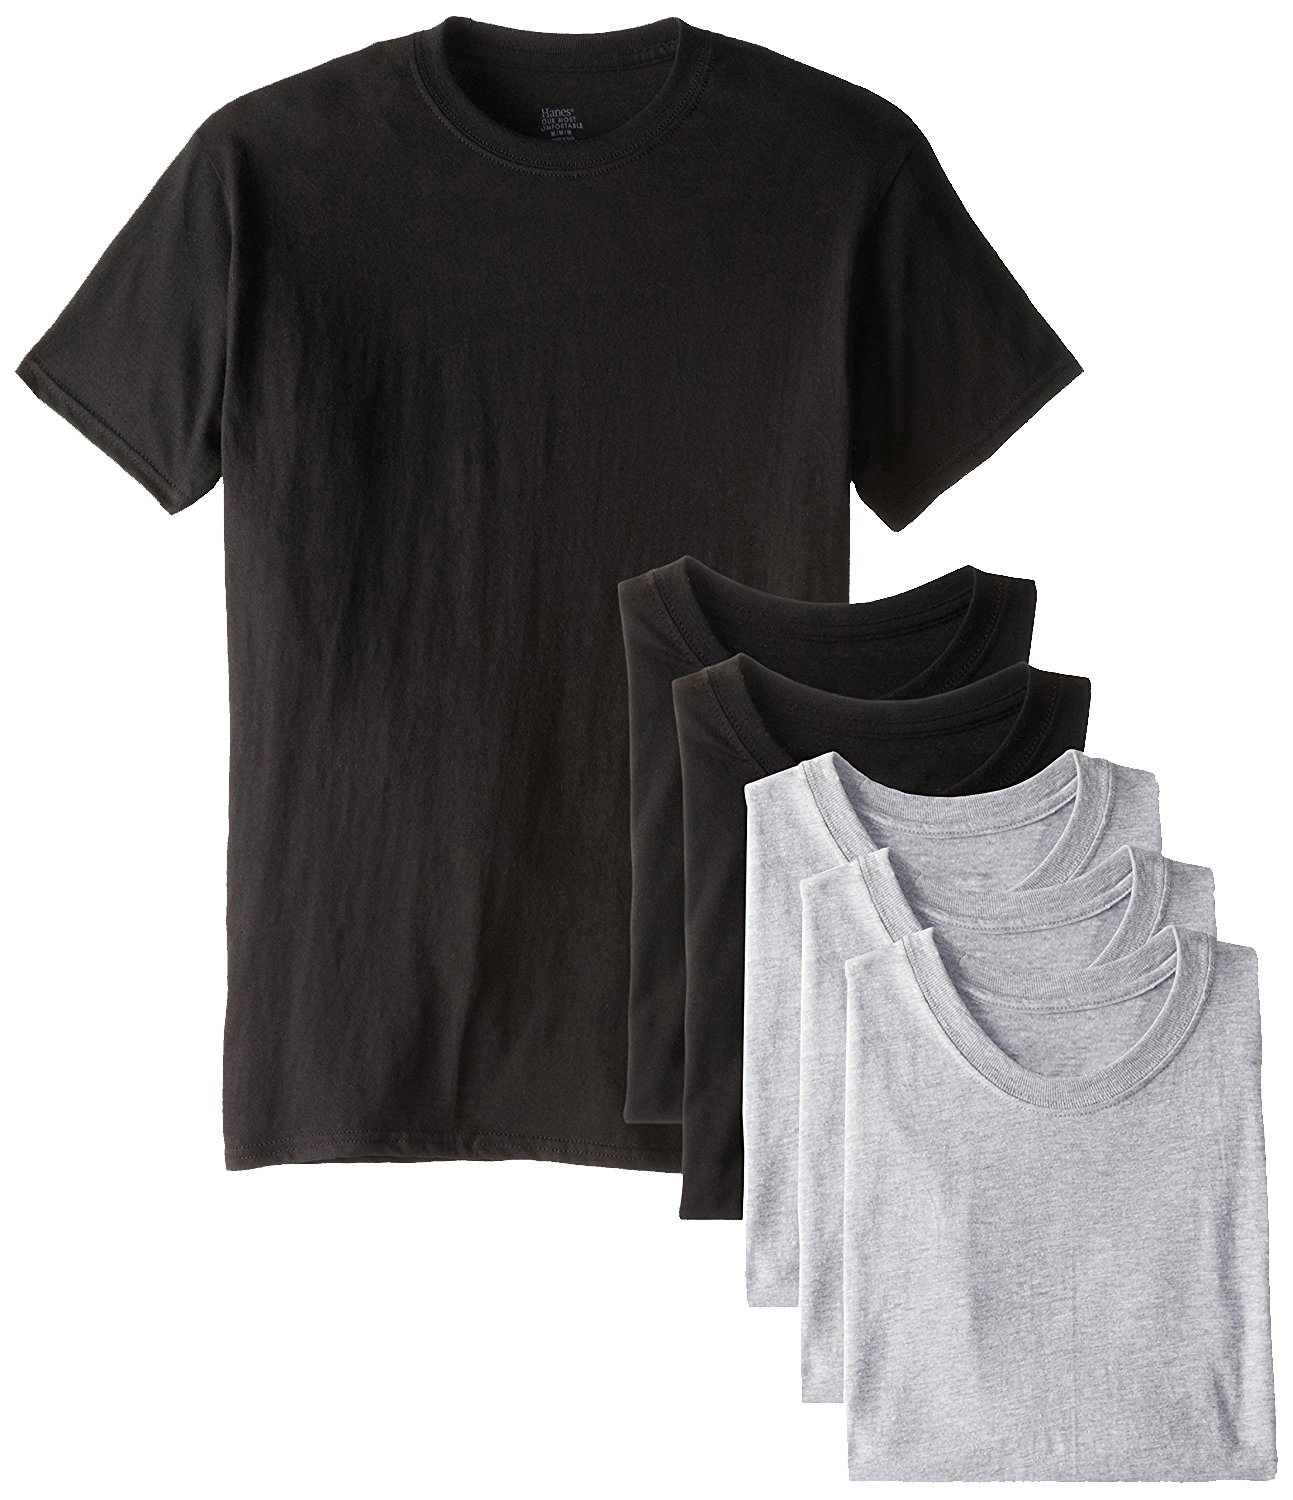 Hanes Men's Tagless Cotton Crew Undershirt |Hanes Men T-shirt|Breathable & Moisture Wicking Technology